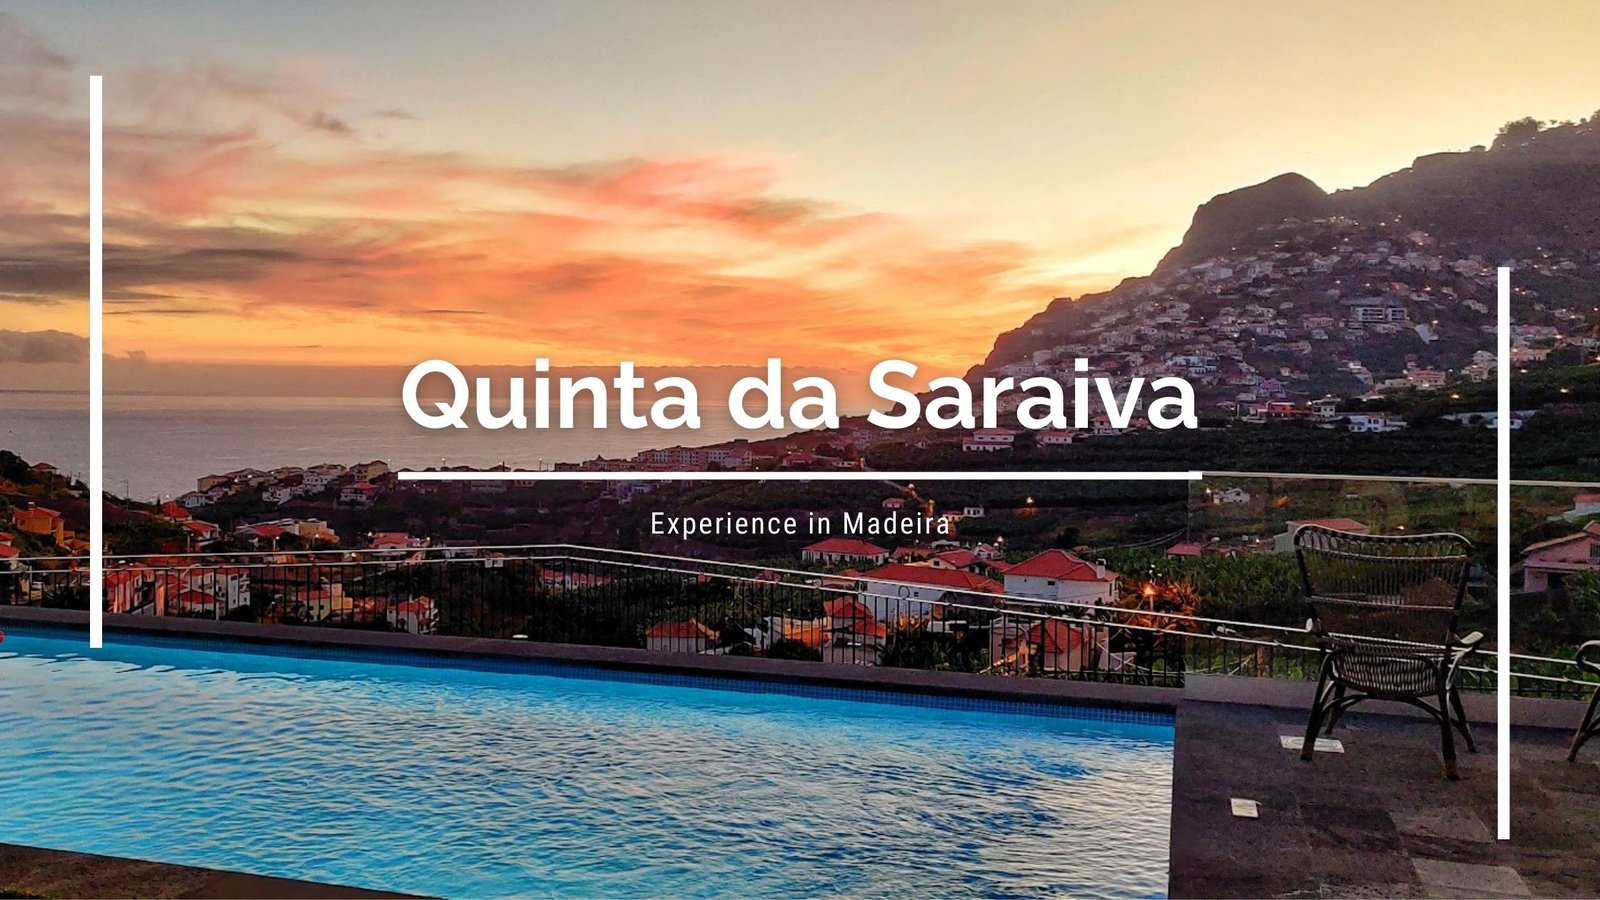 Quinta da Saraiva – Experience in Madeira